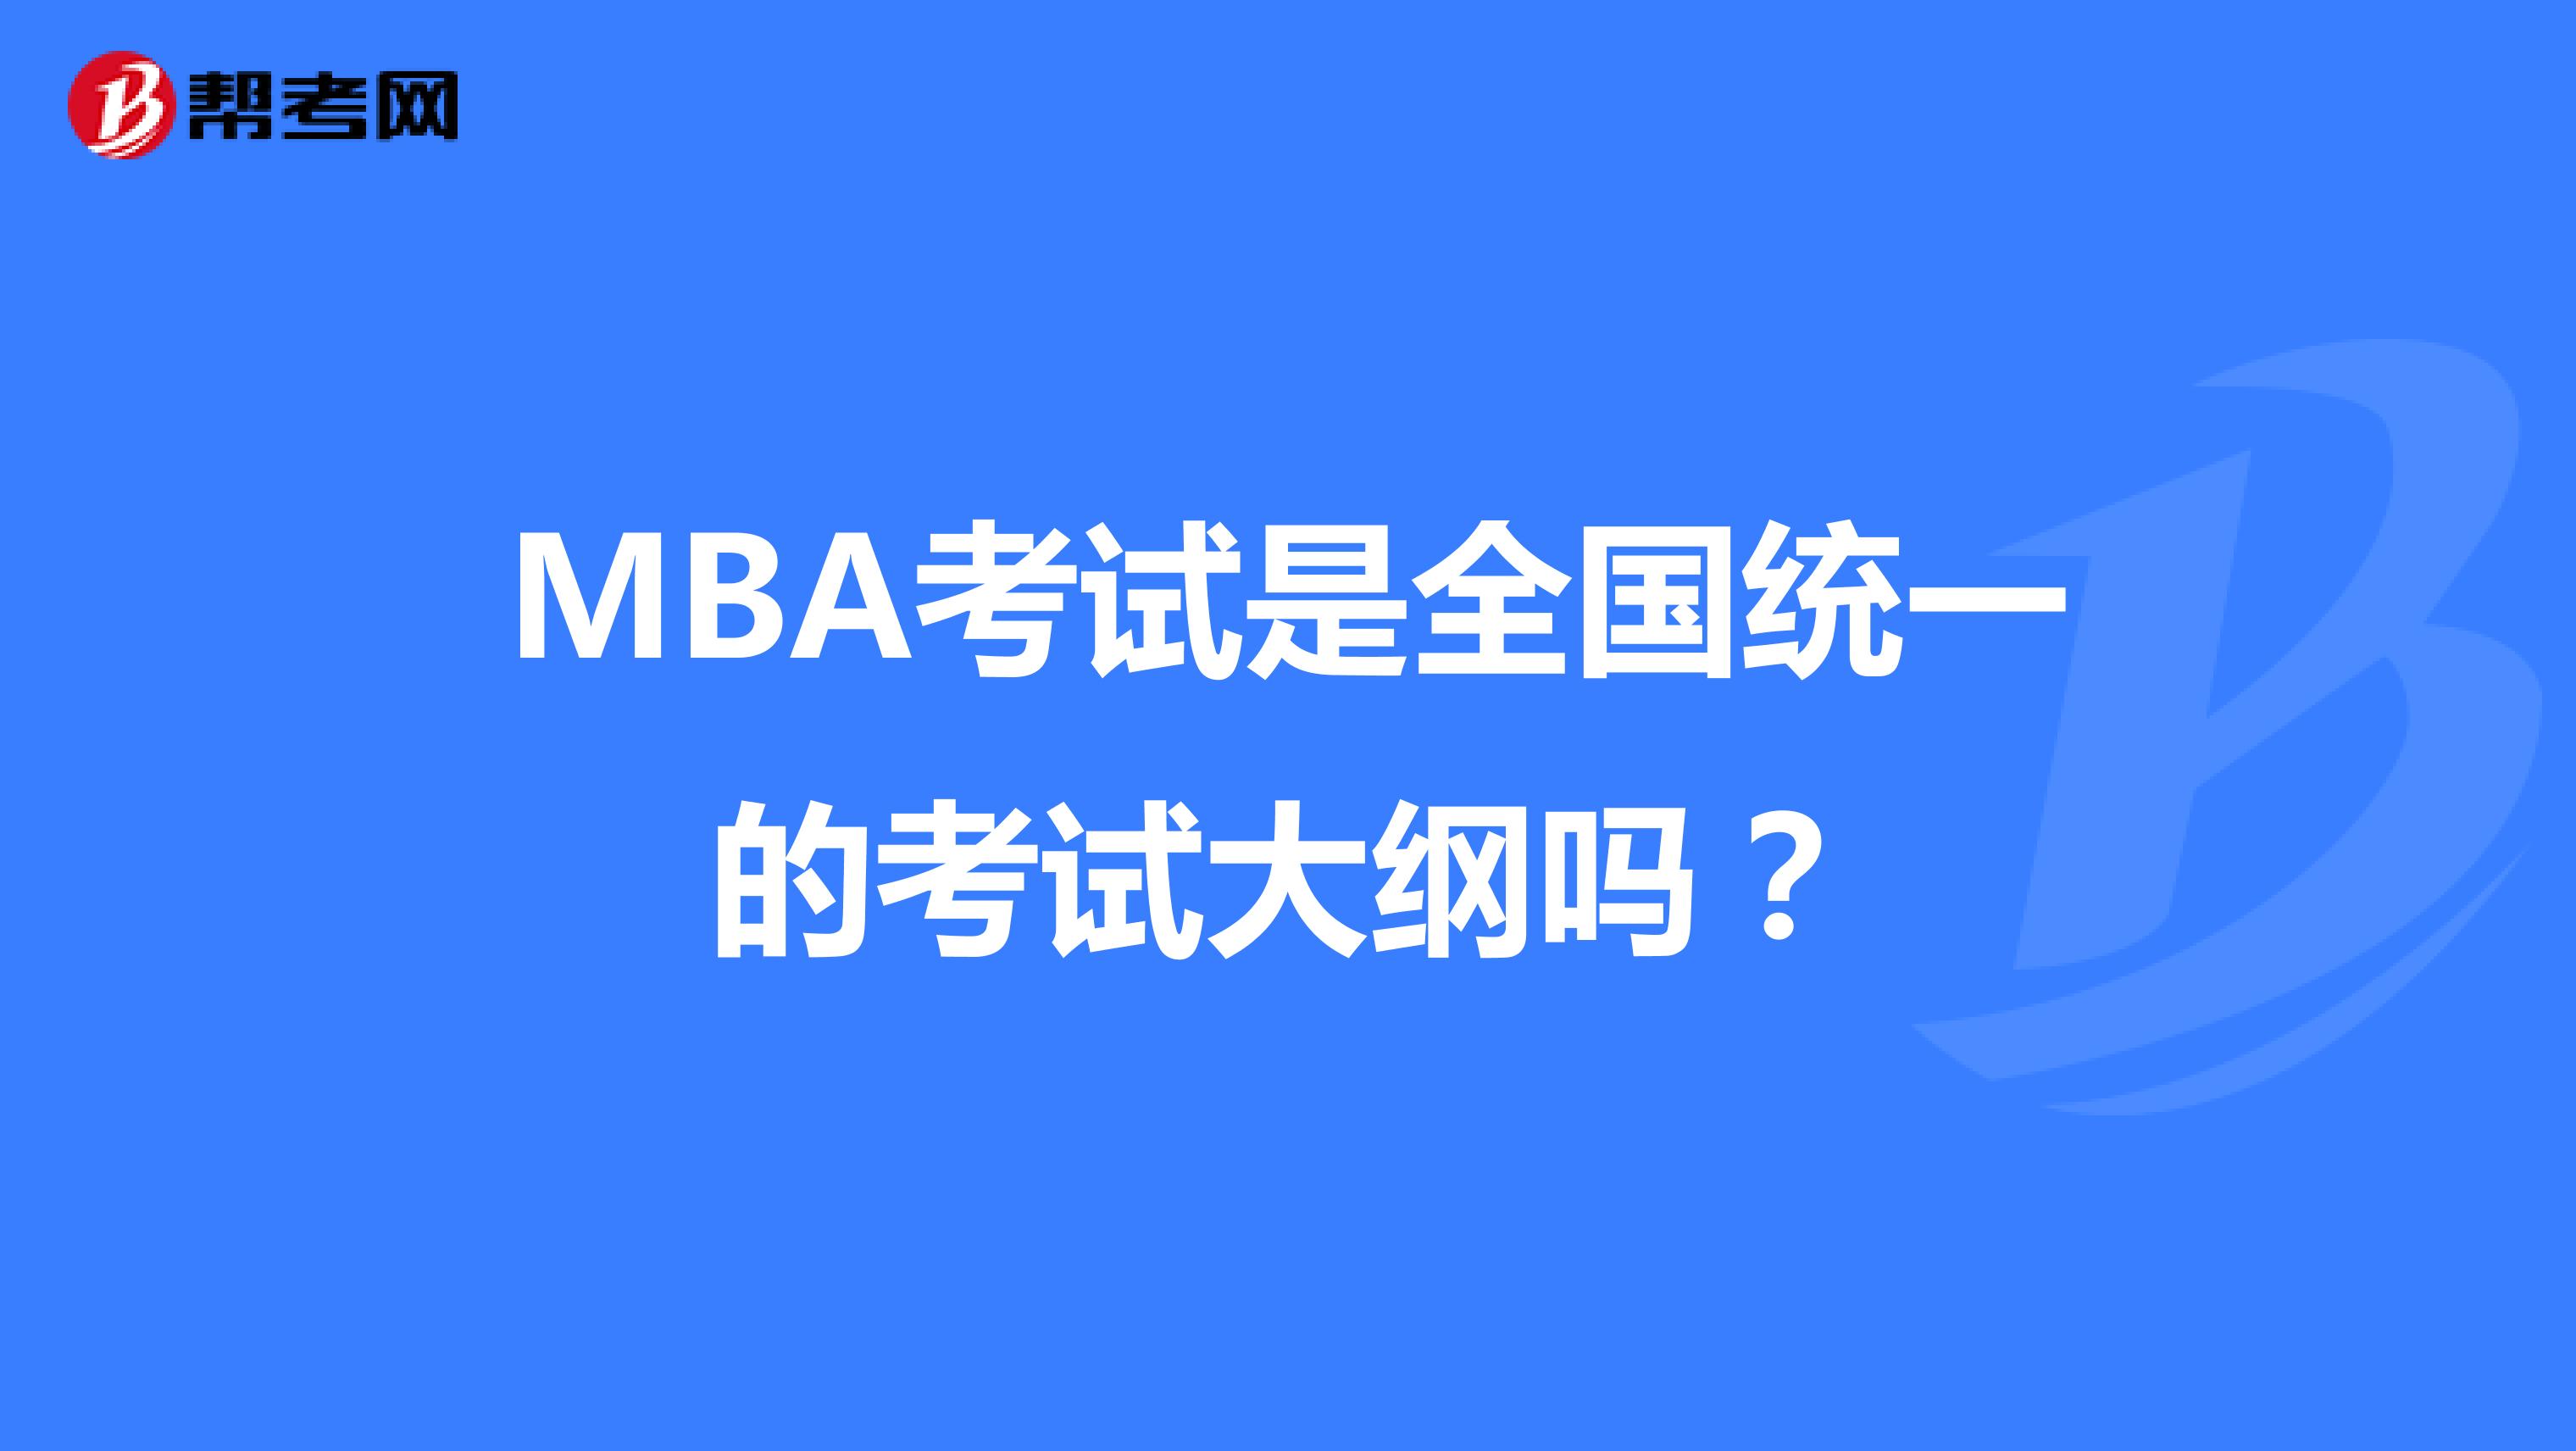 MBA考试是全国统一的考试大纲吗？